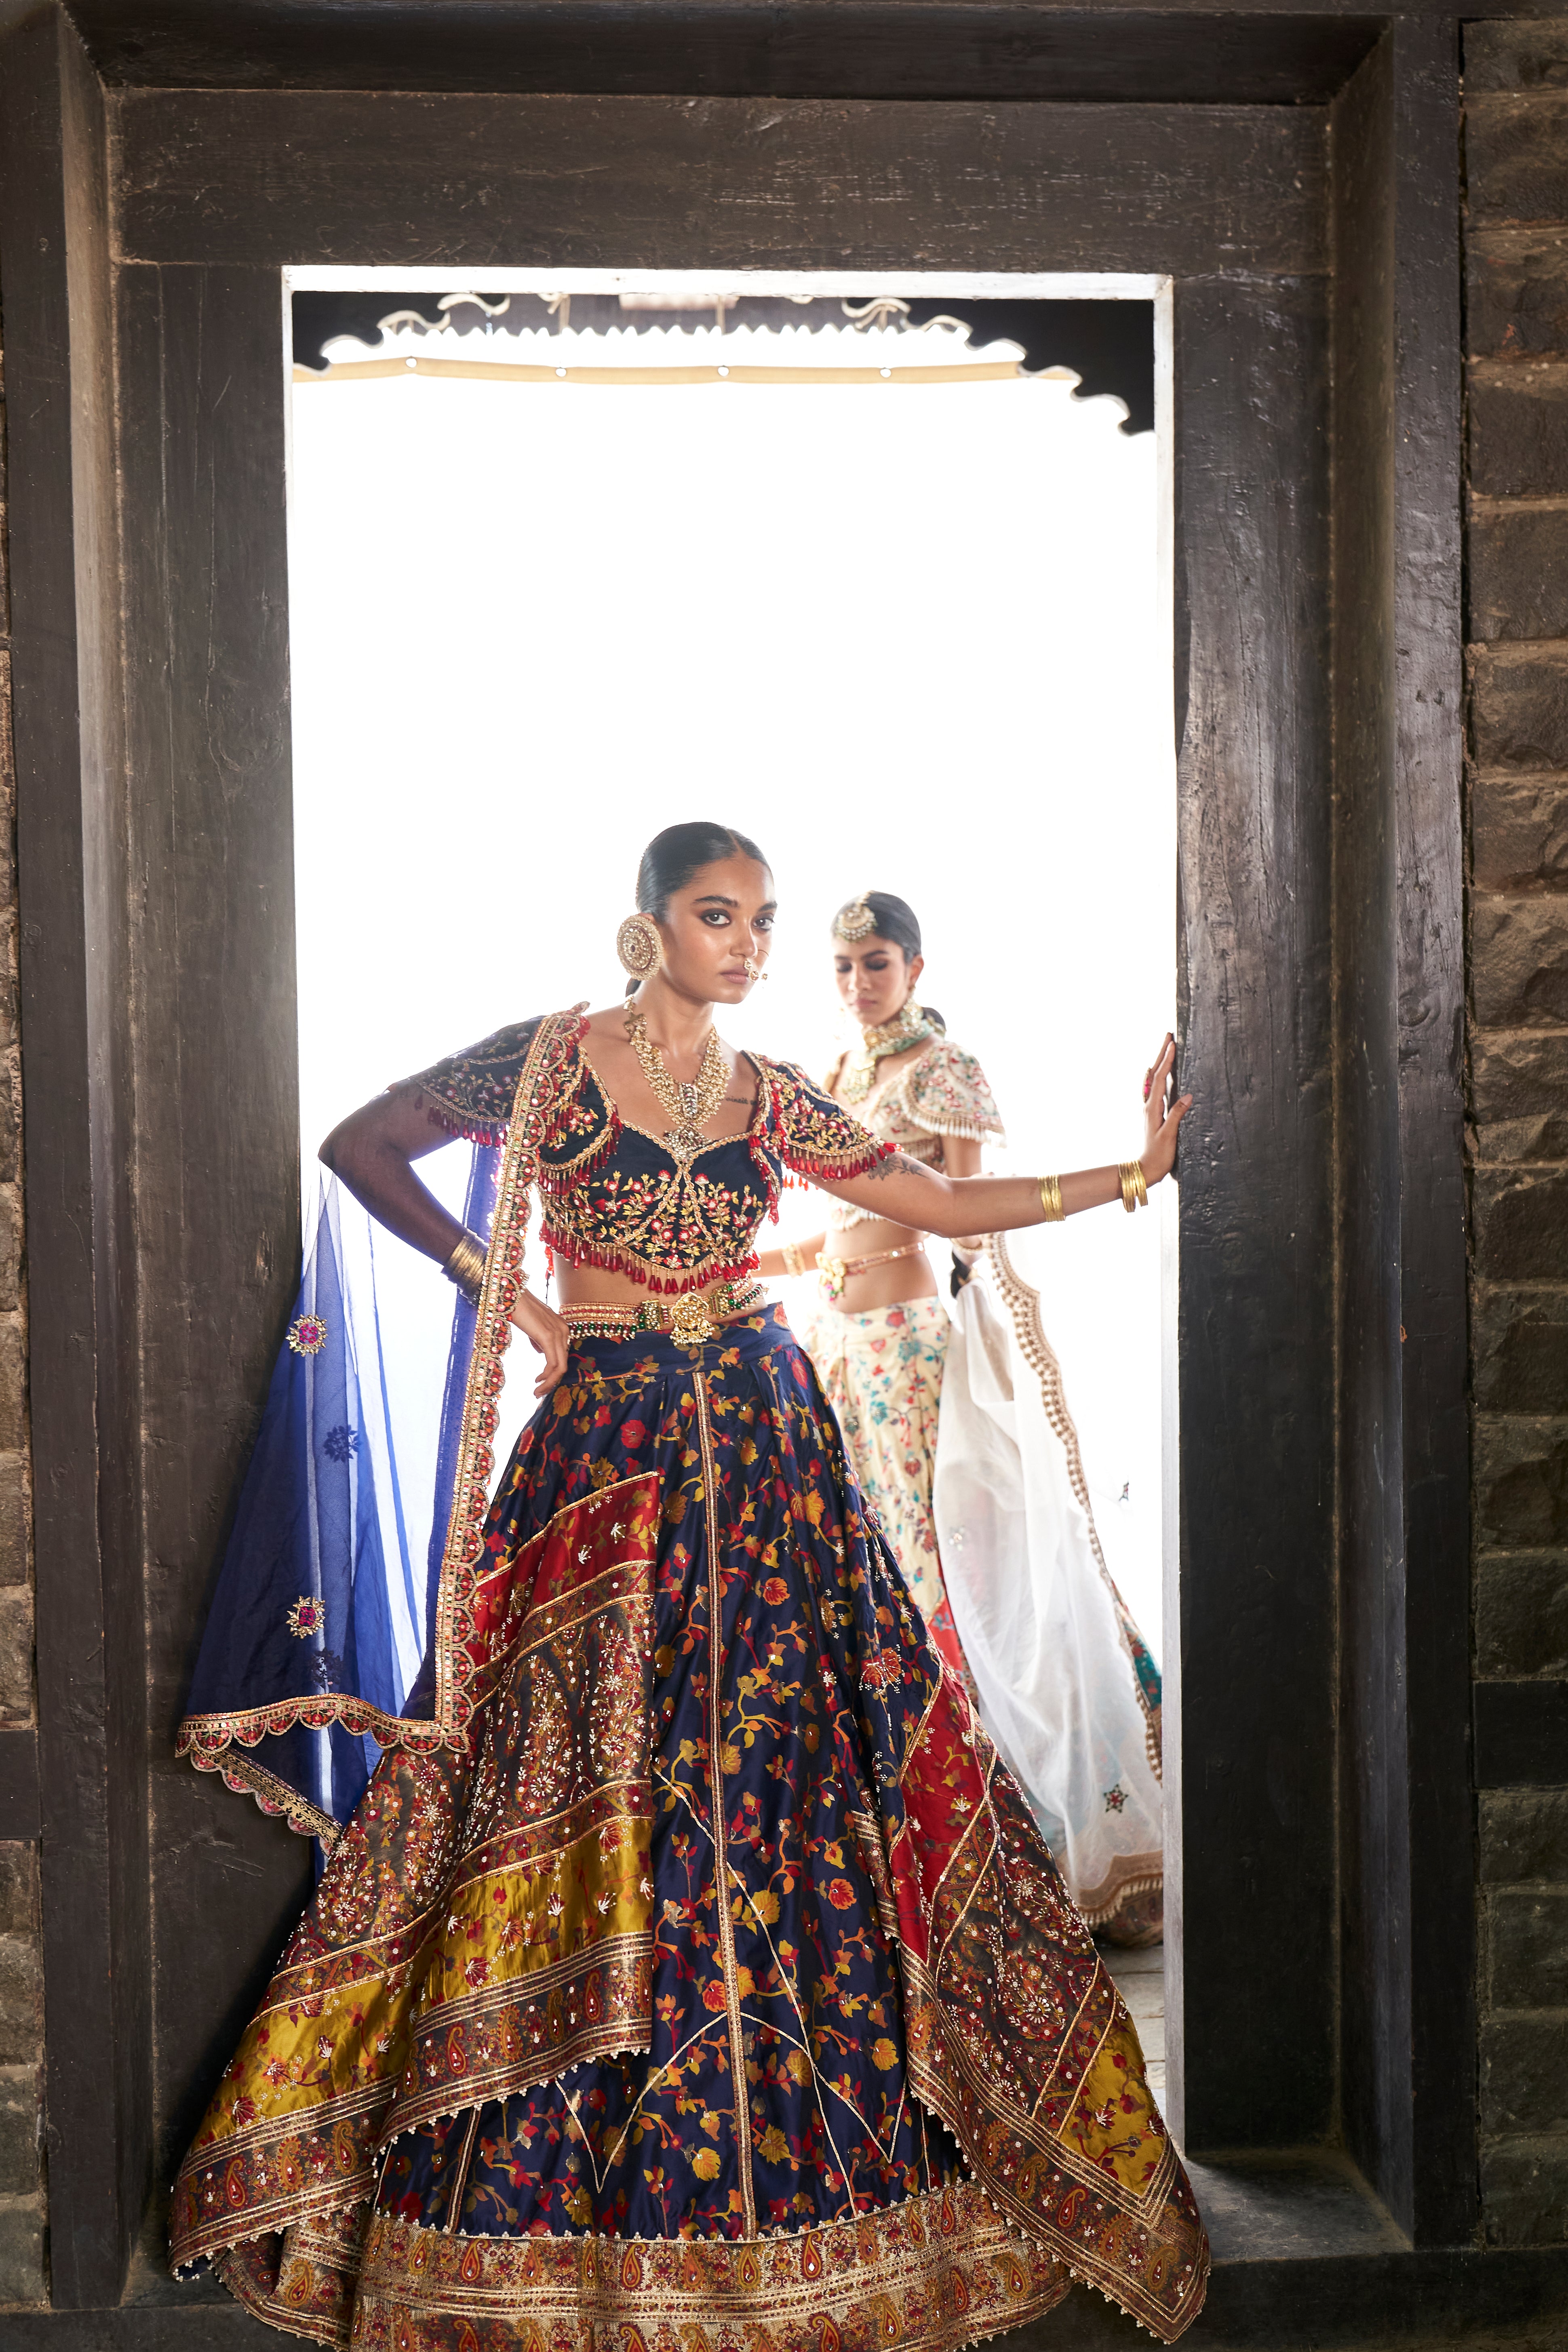 Saree or Lehenga for Wedding Guest: What Should I Wear? – Lashkaraa